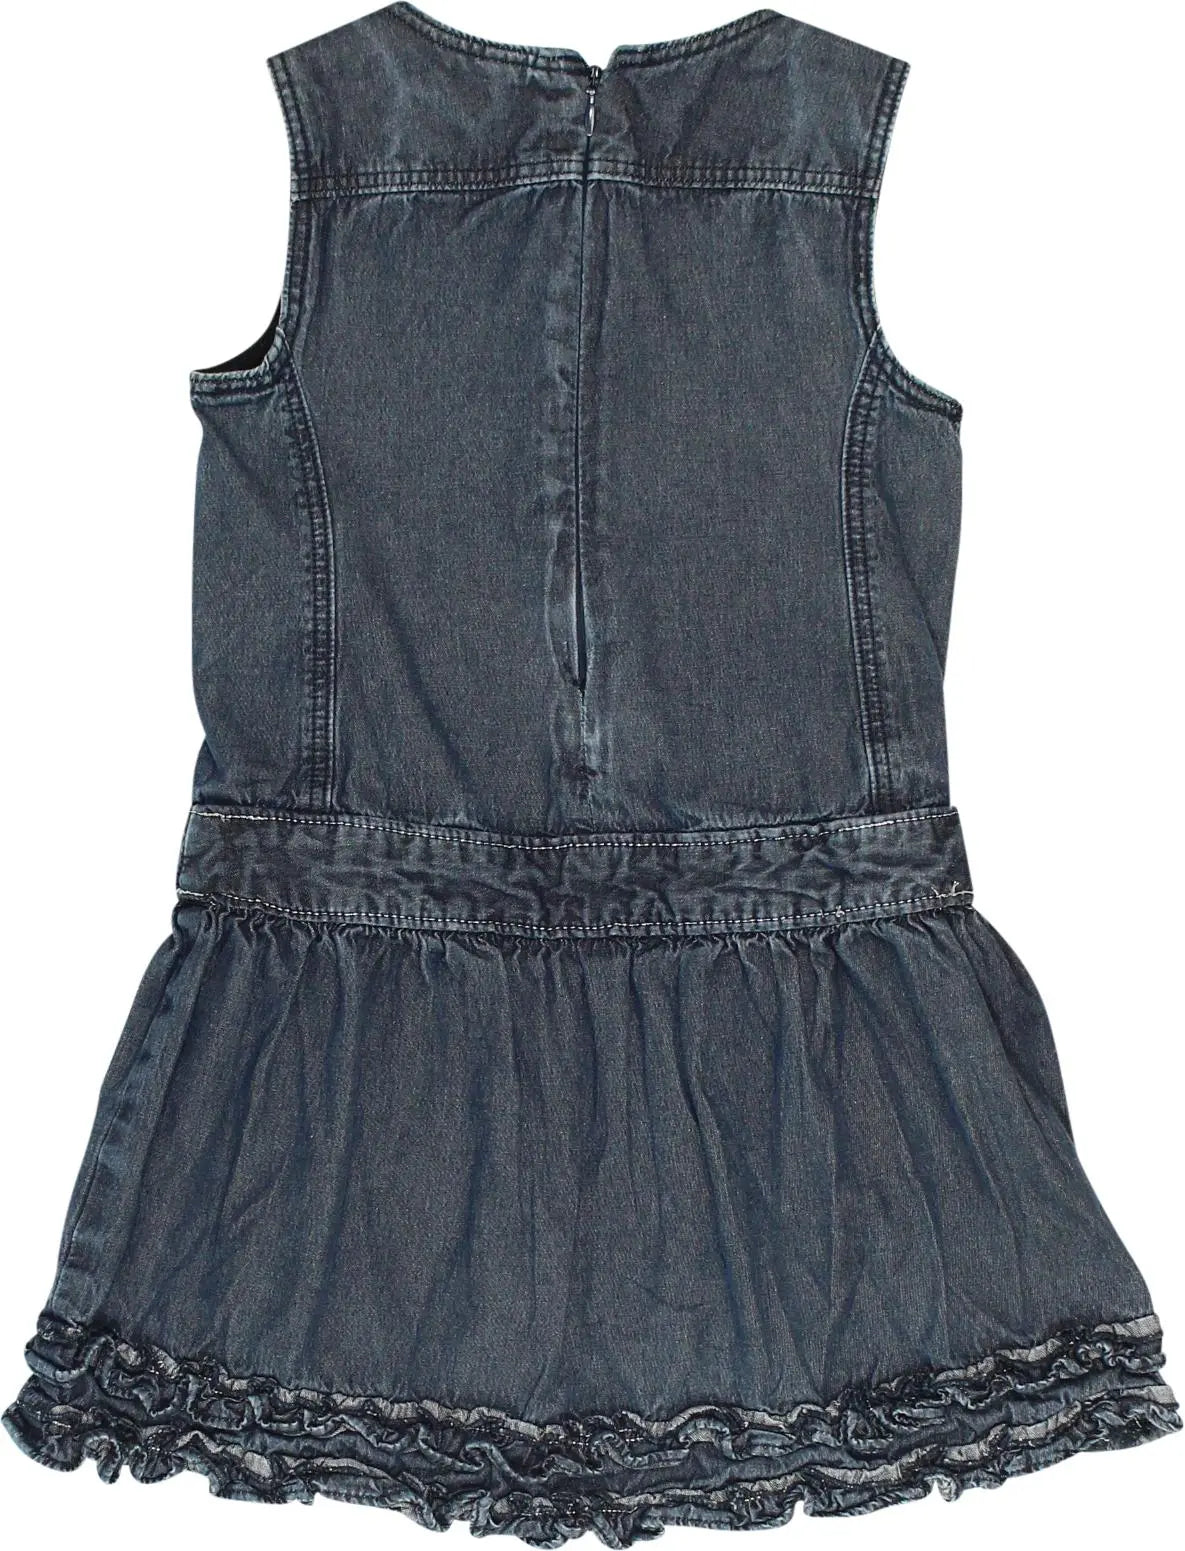 H&M - Denim Dress- ThriftTale.com - Vintage and second handclothing